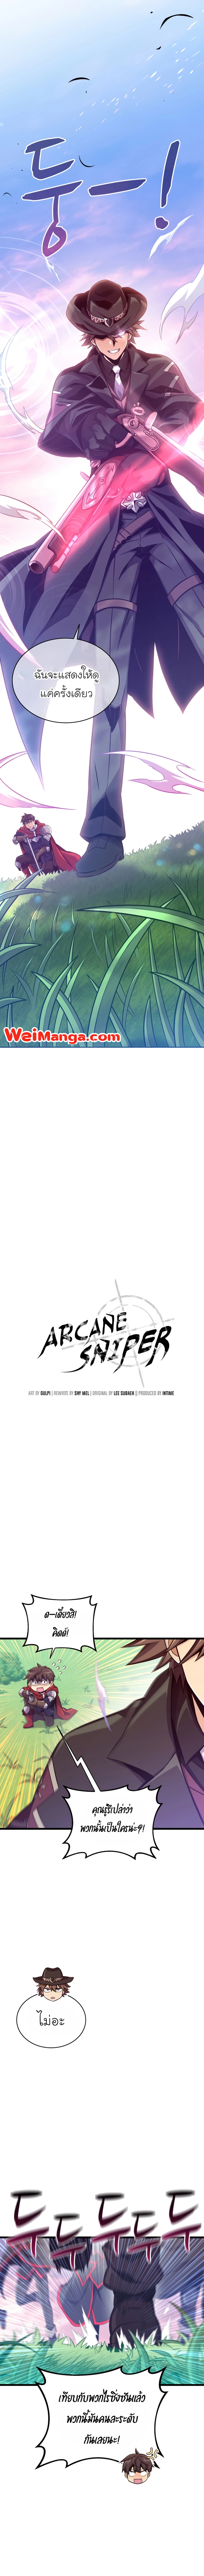 Arcane Sniper91 (4)